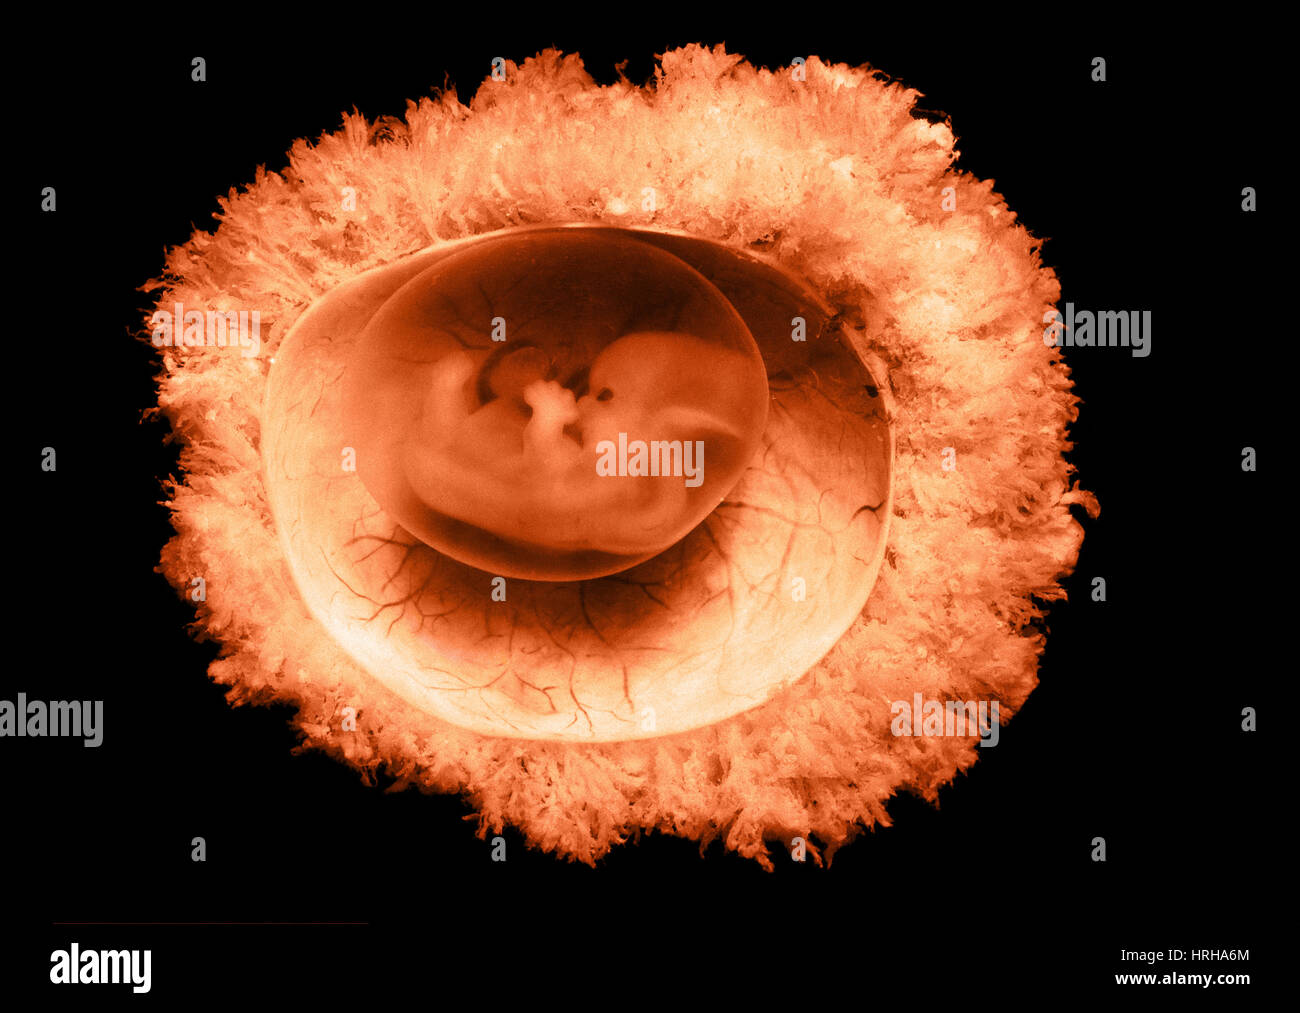 45 day old human embryo Stock Photo